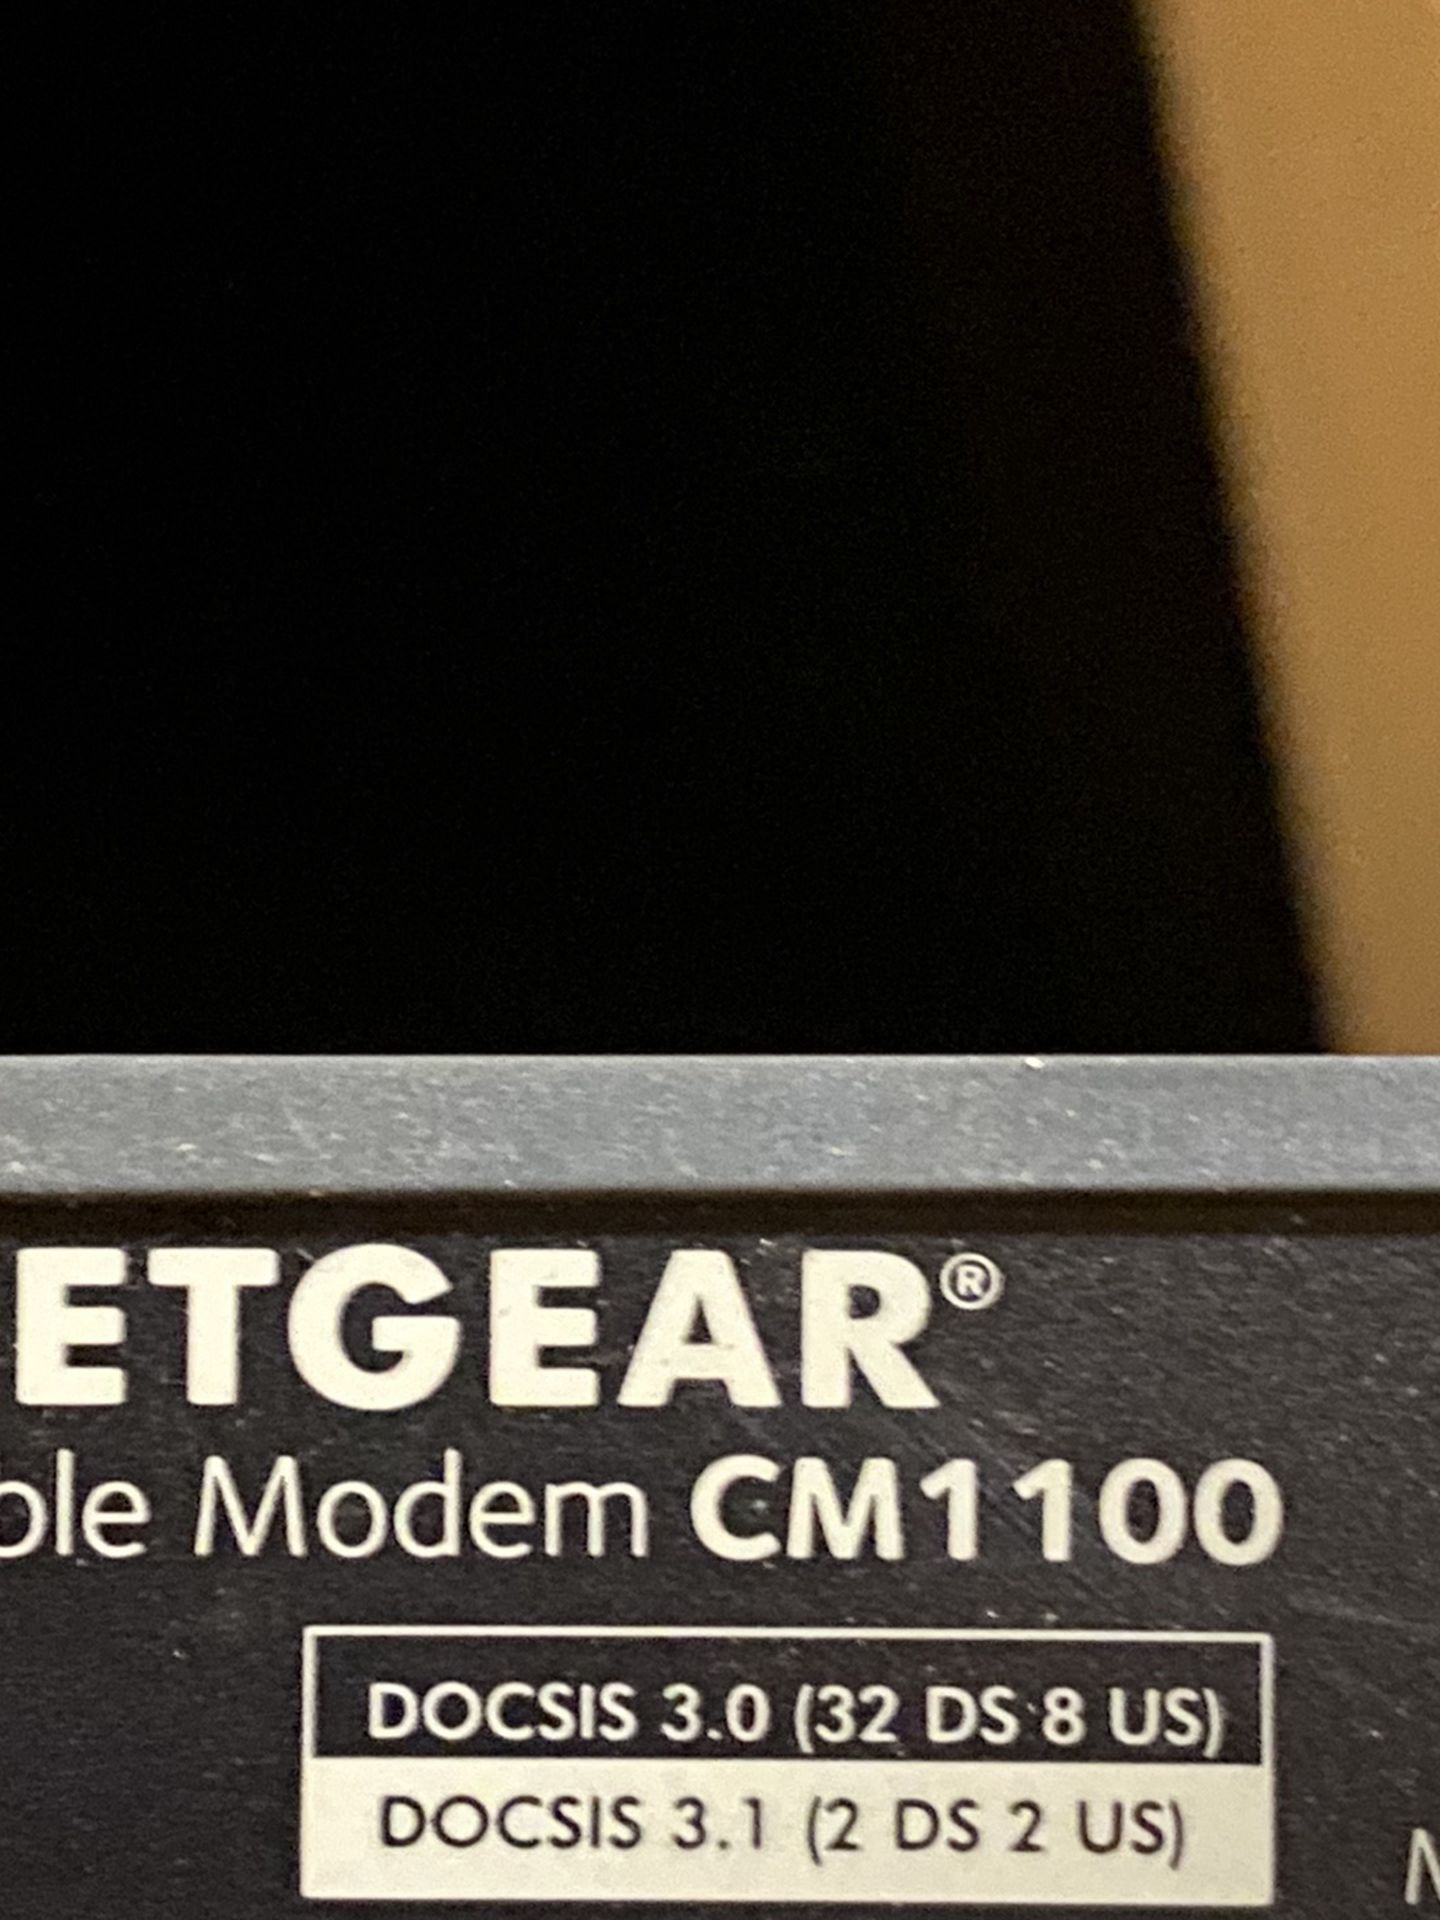 Netgear CM1100 Multi-Gig Modem